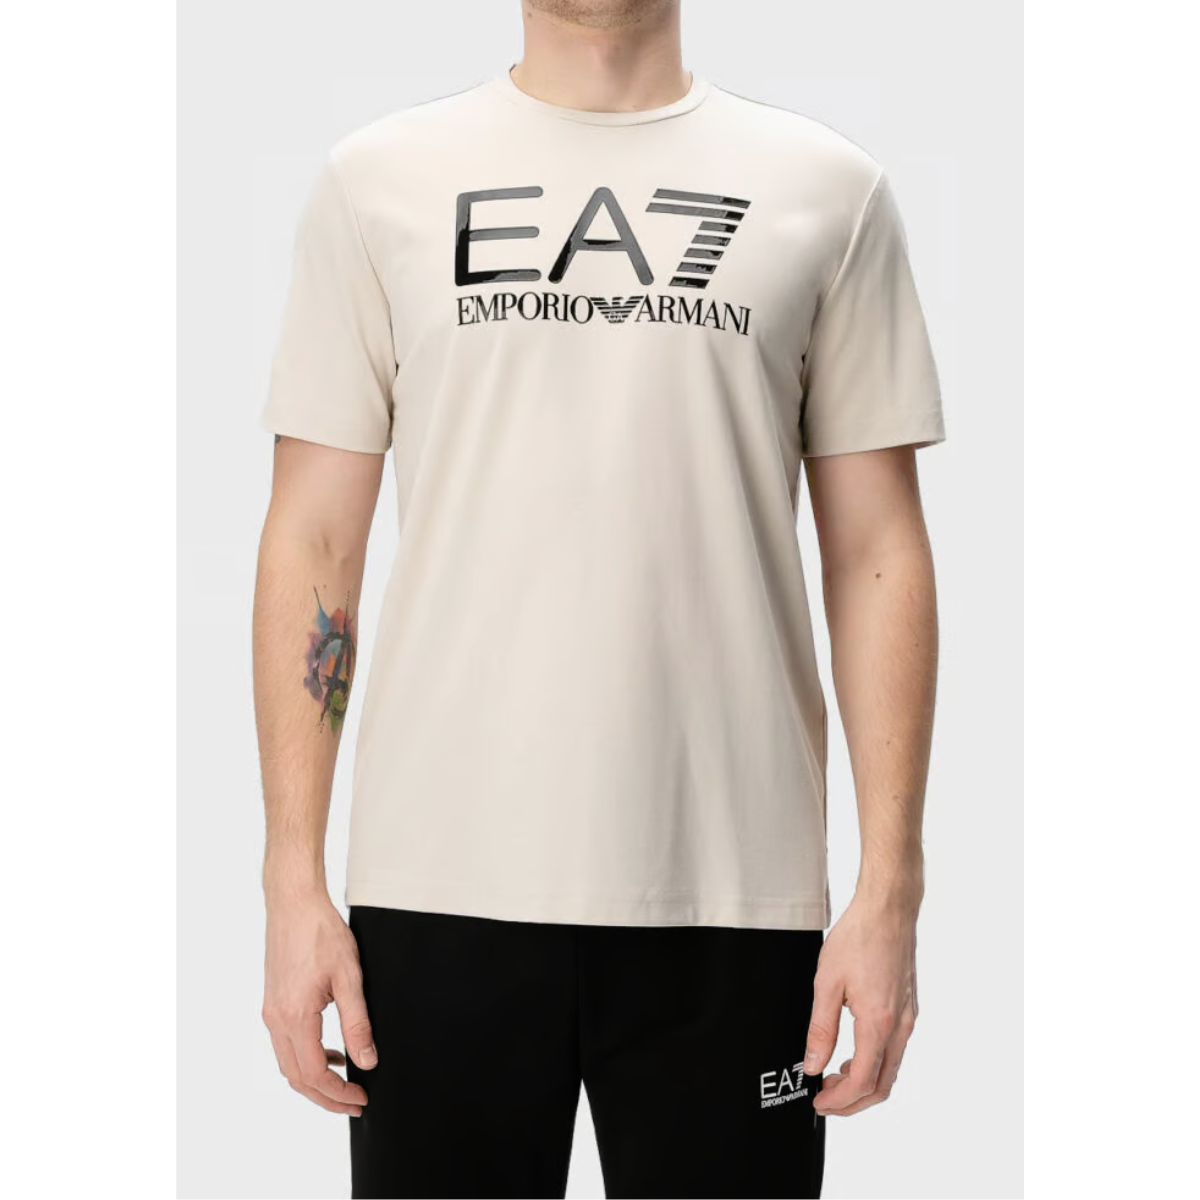 EA7 Giorgio Armani - Man Jersey T-Shirt - Silver Cloud